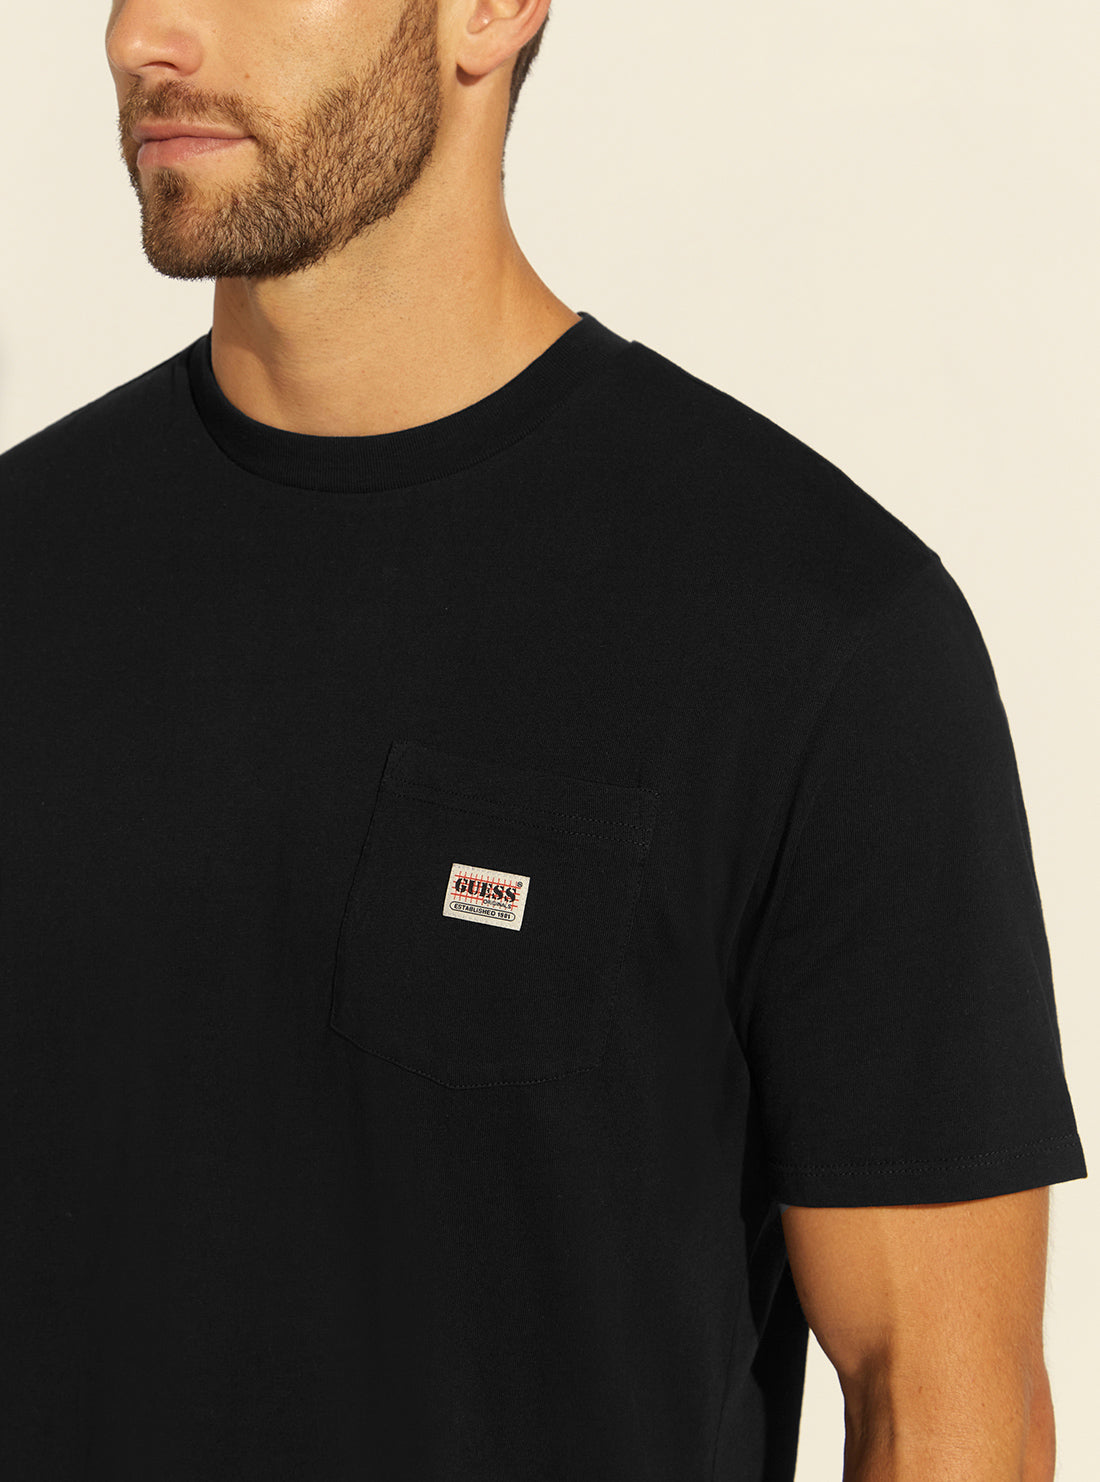 GUESS Mens Guess Originals Black Pocket Label T-Shirt M1BI43K9XF1 Model Detail View